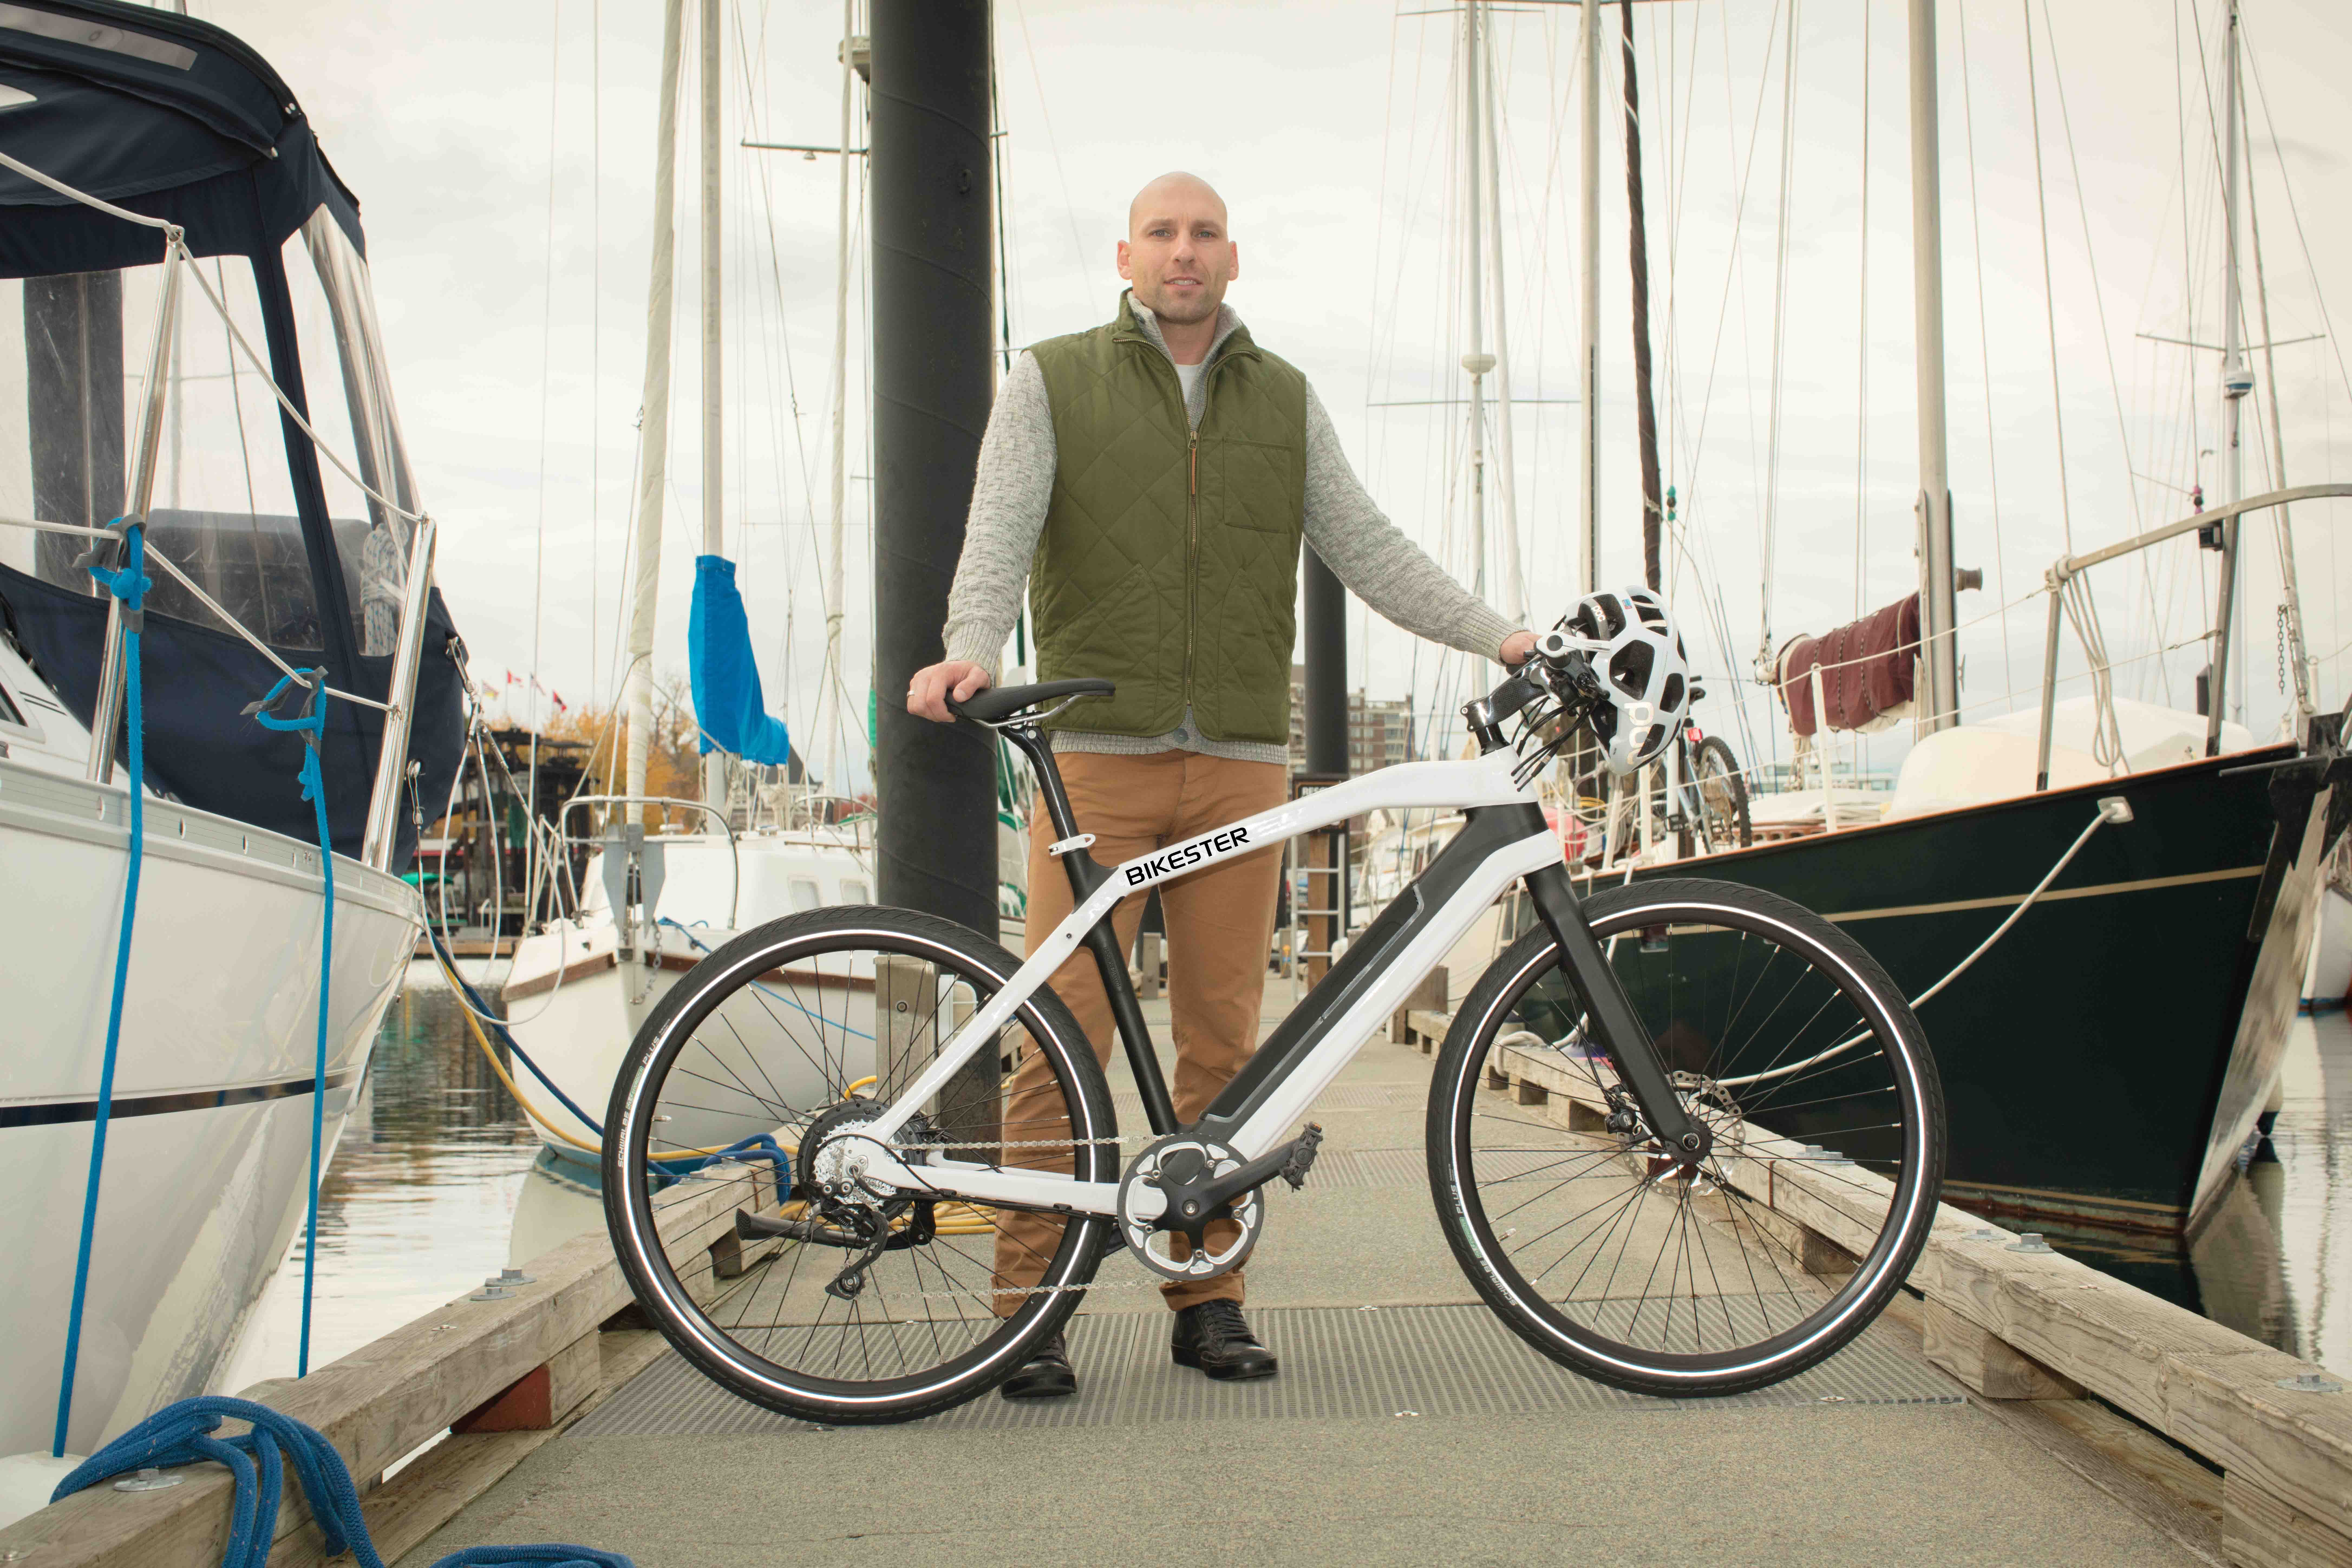 diavelo zeitgeist electric bike by sailboat